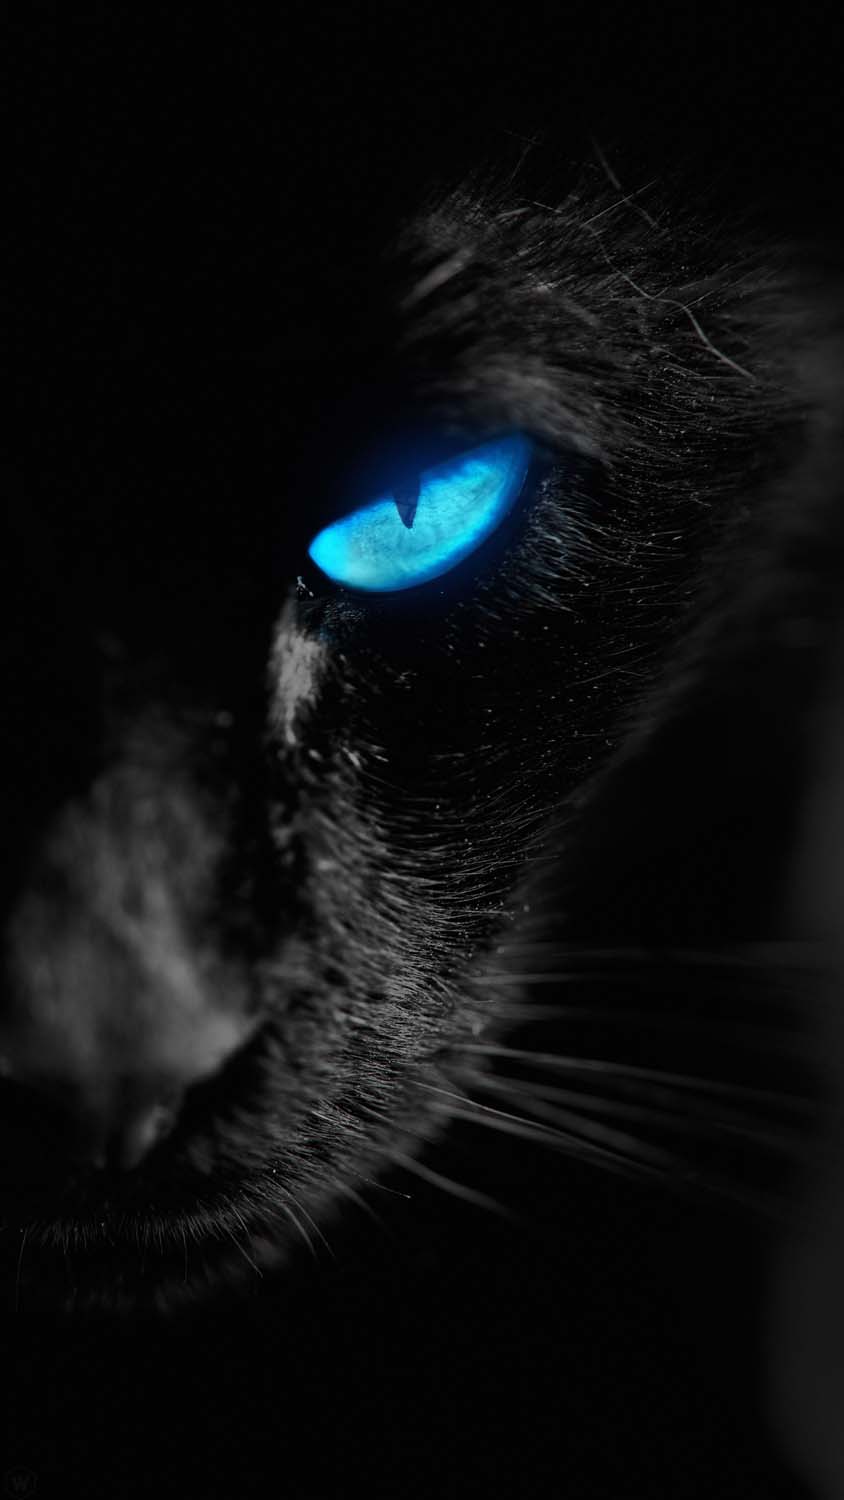 200000 Best Black Cat Photos  100 Free Download  Pexels Stock Photos